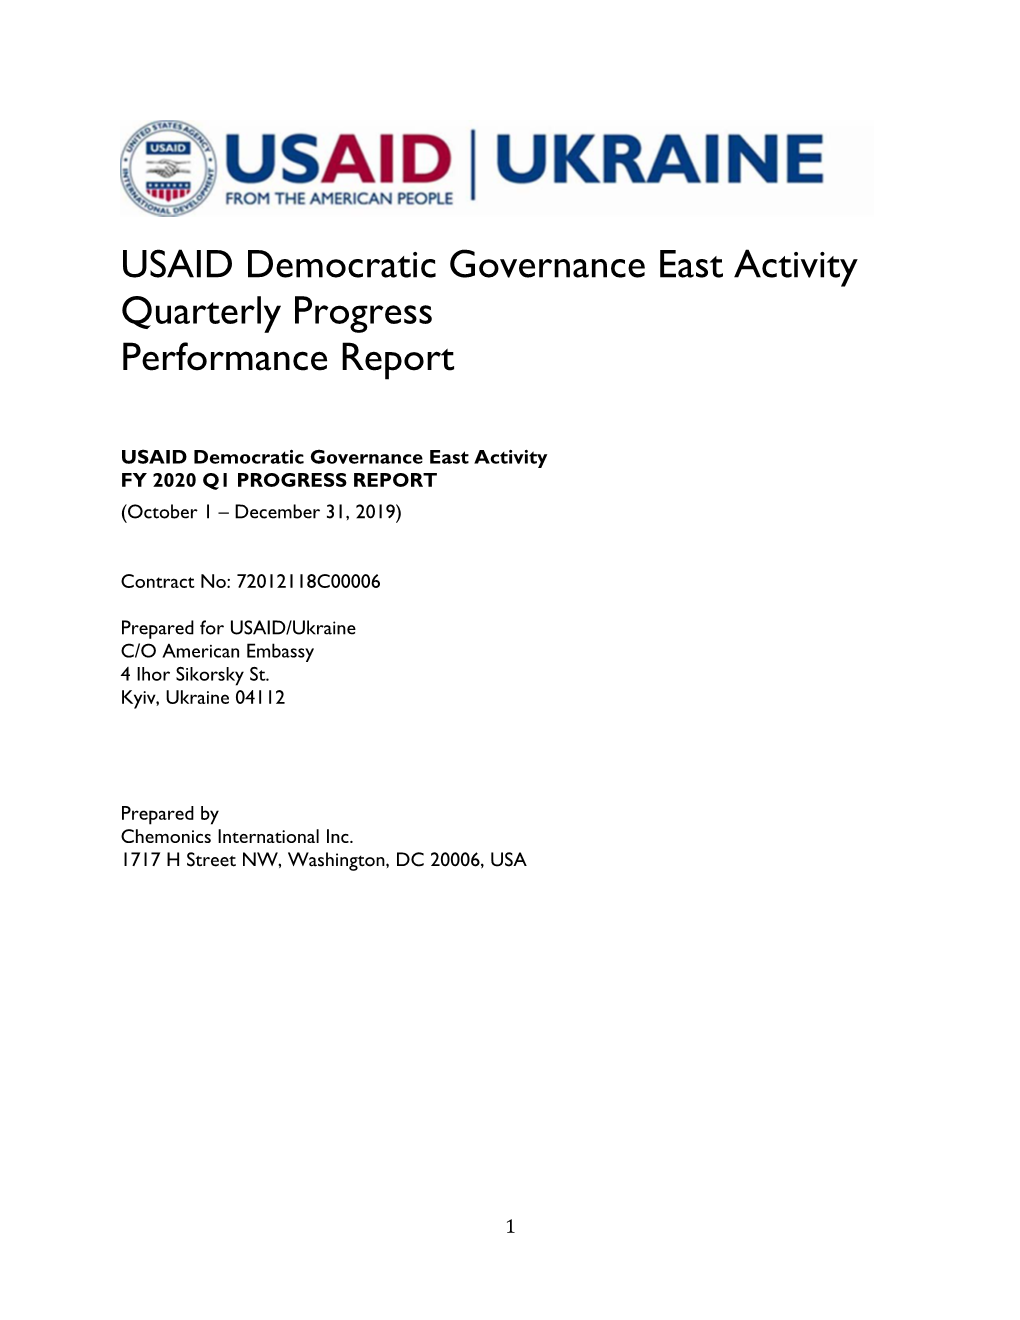 USAID Democratic Governance East Activity Quarterly Progress Performance Report